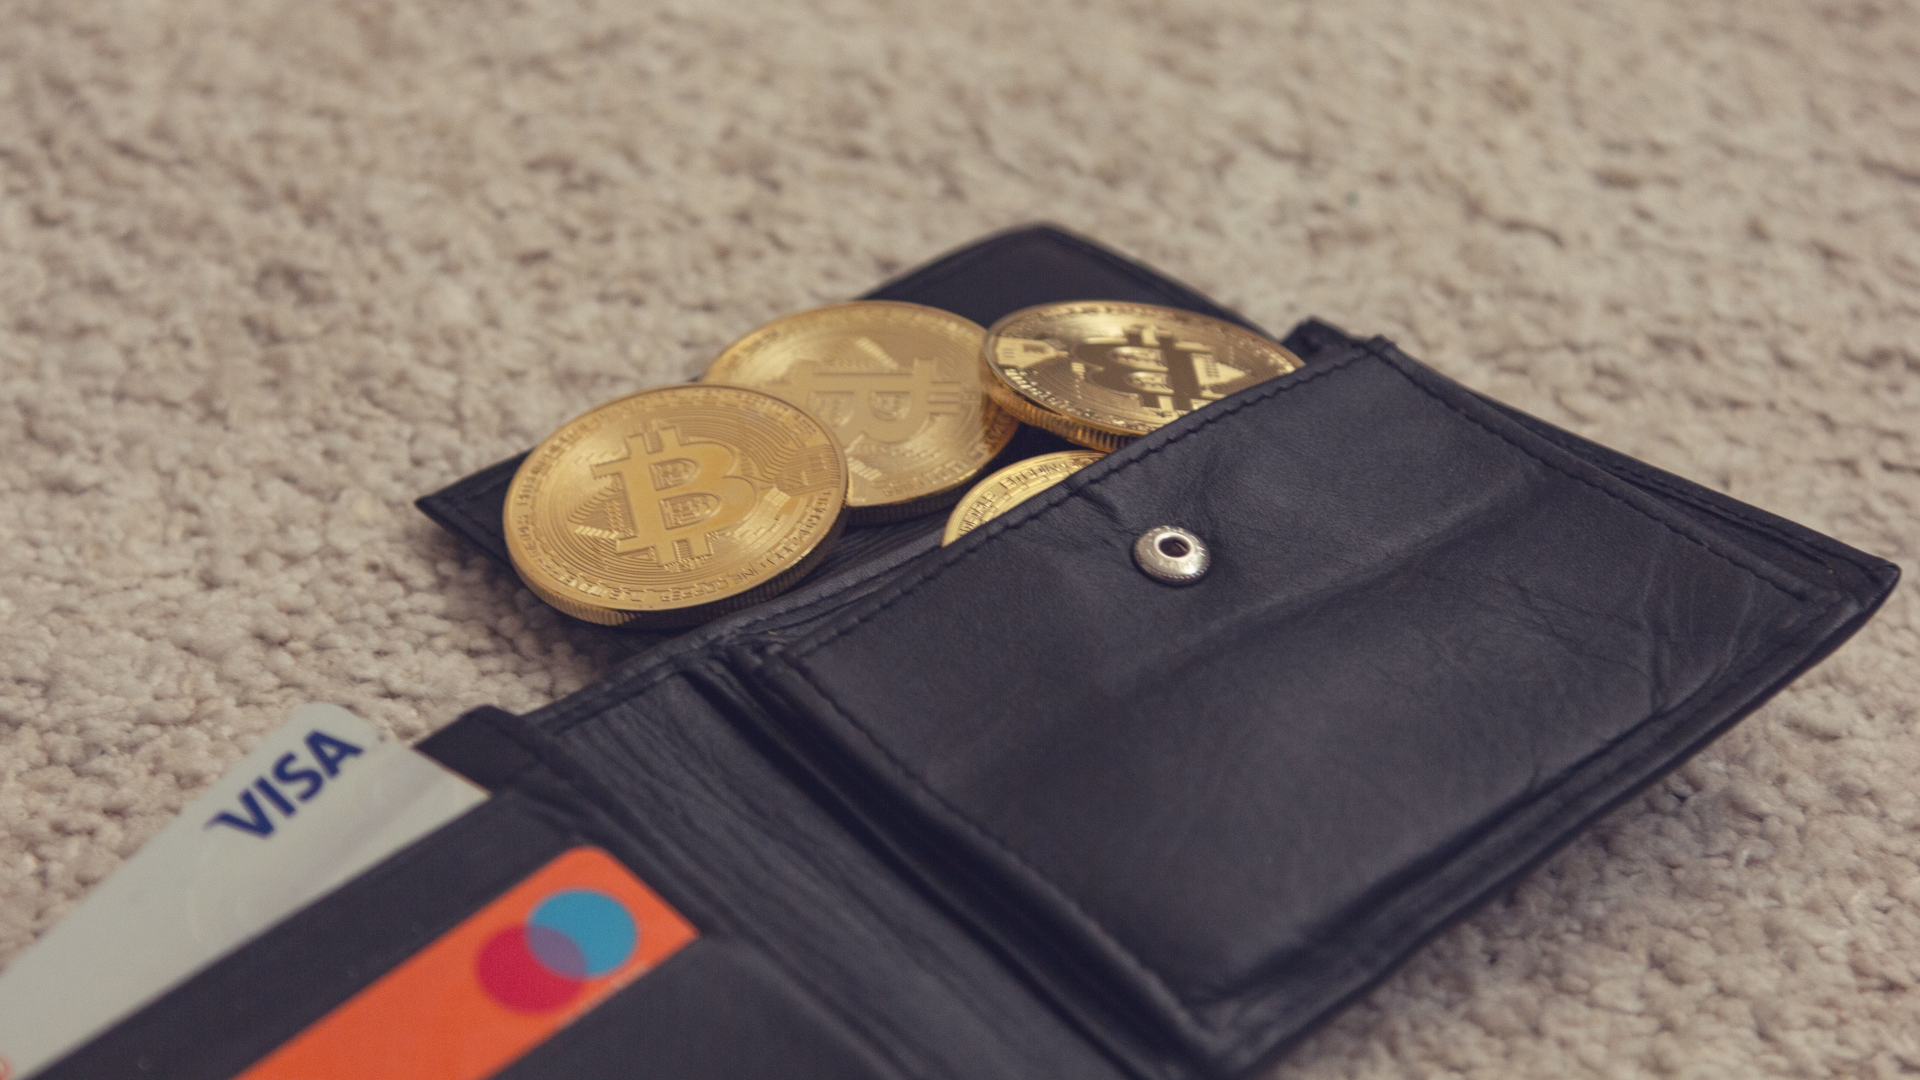 A black wallet with Bitcoin coins